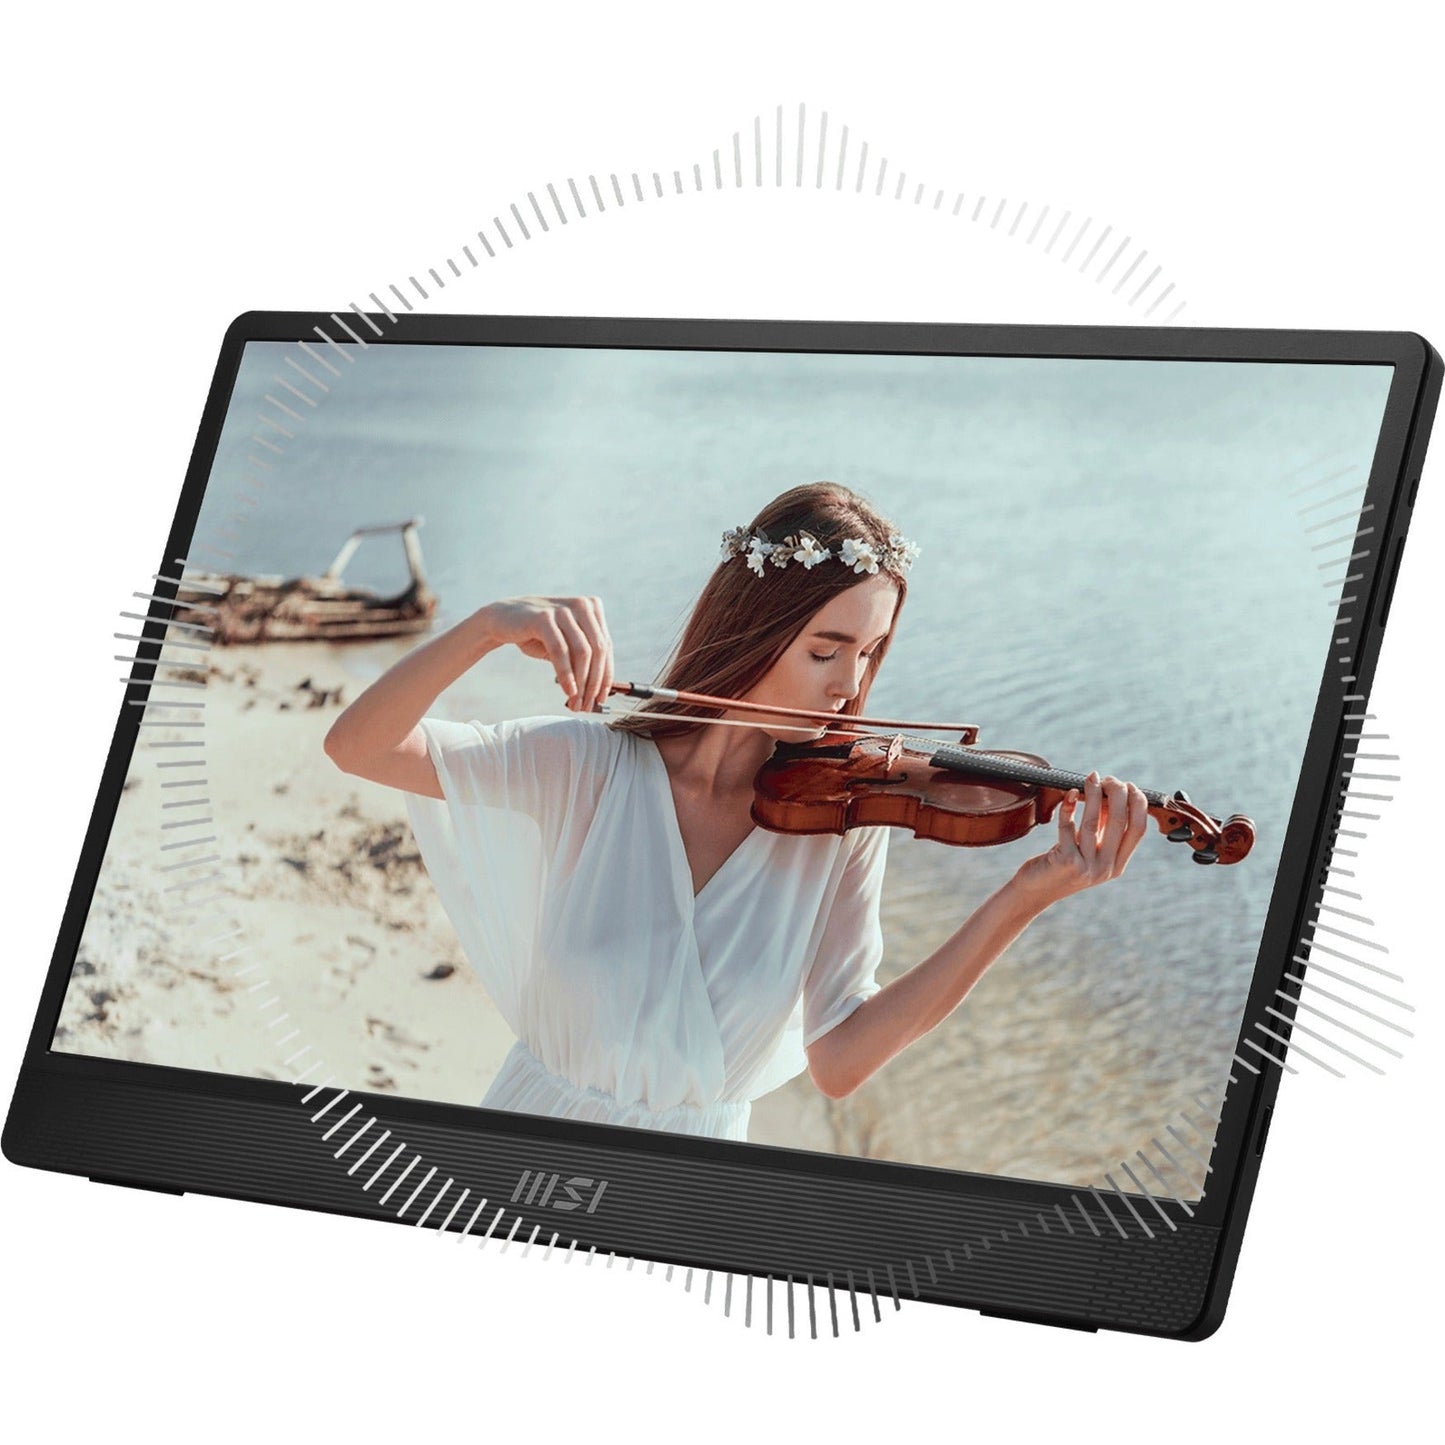 MSI Pro MP161 15.6" Full HD LCD Monitor - 16:9